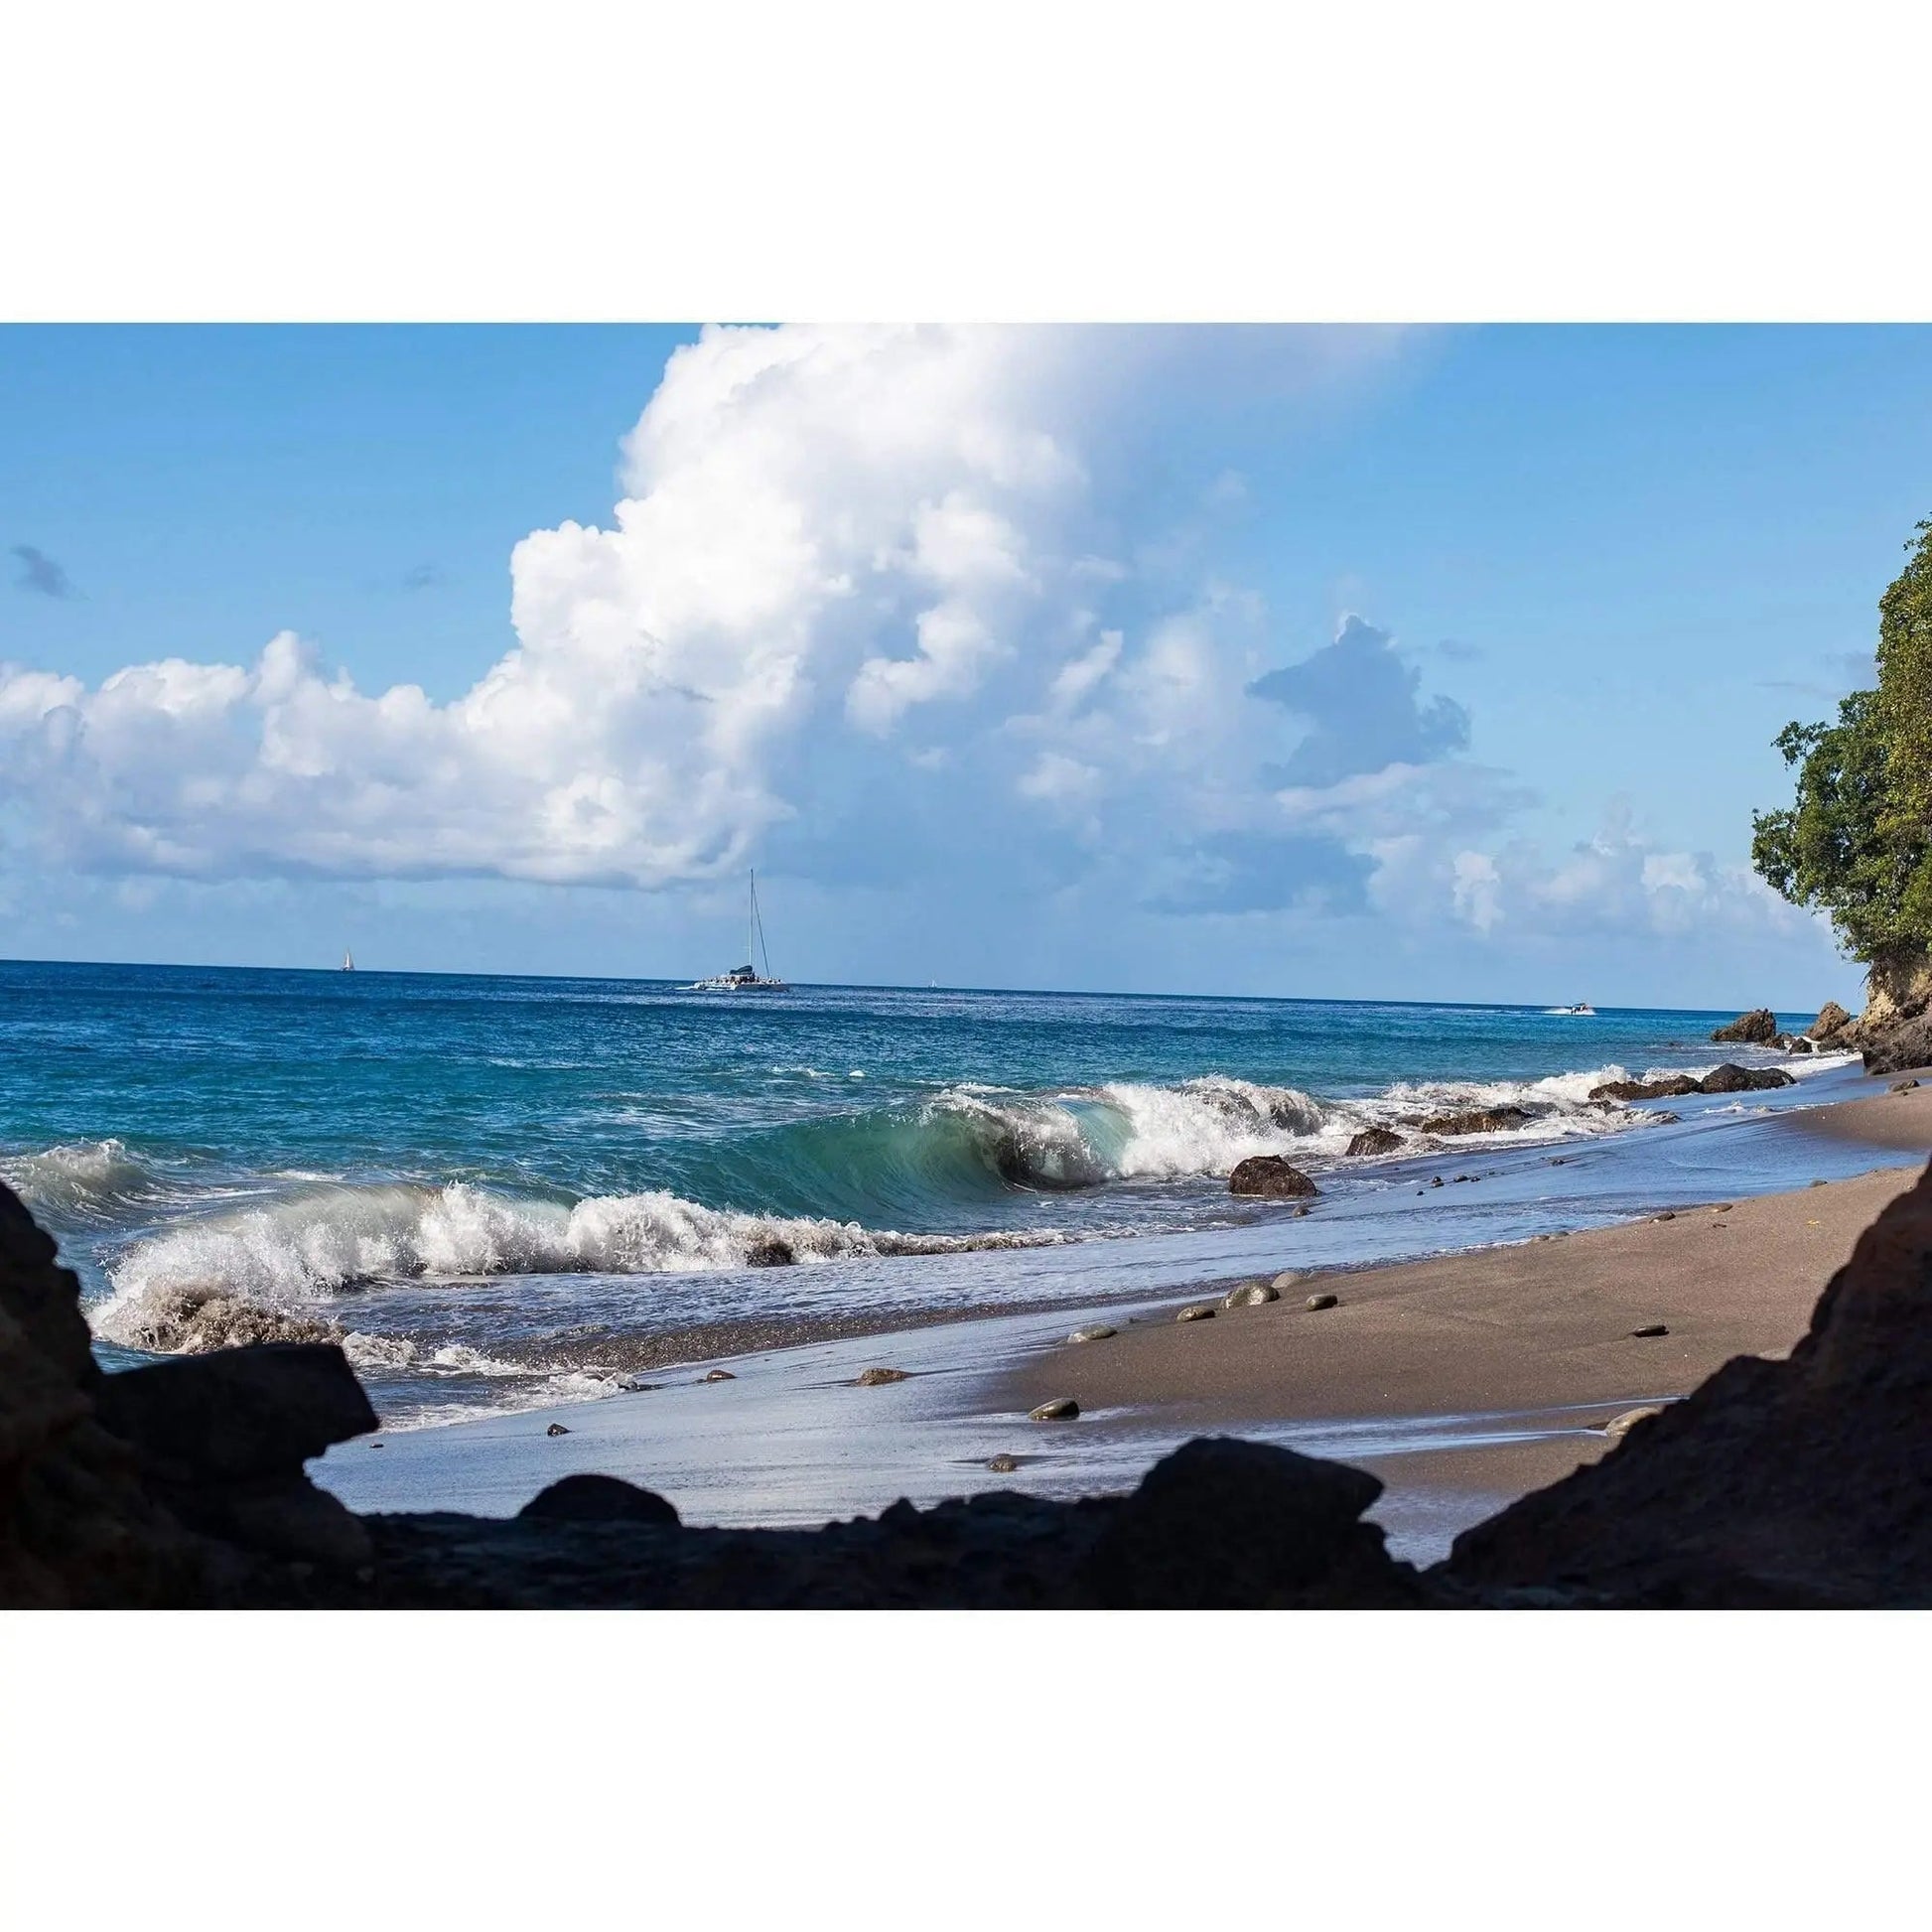 caribbean waves crash on sand